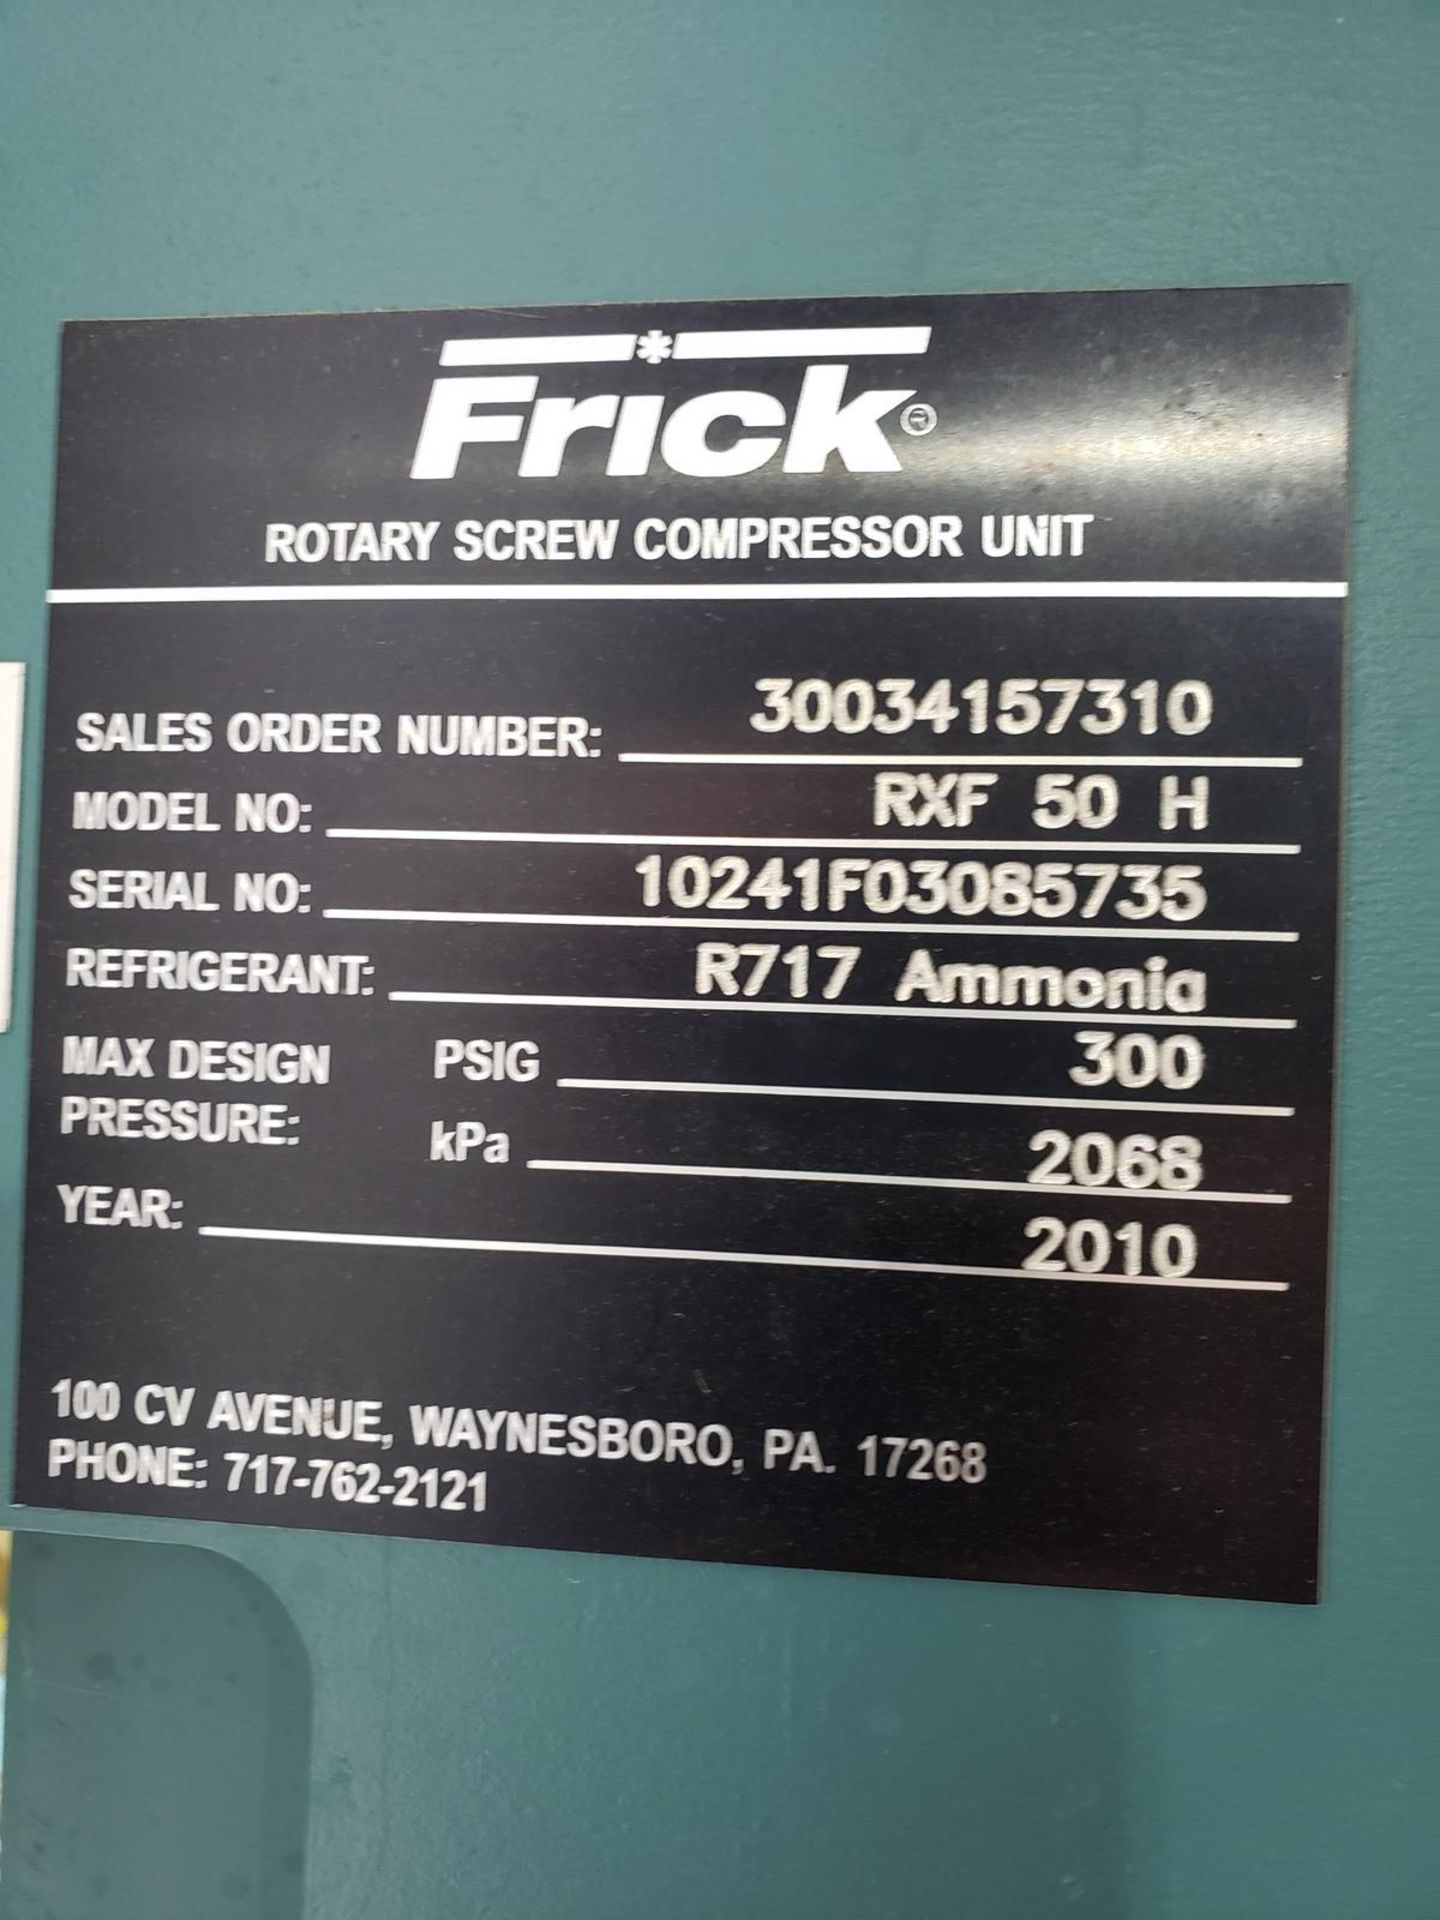 Frick 125 Ammonia Compressor, M# RXF 50 H, S/N 10241F03085735 | Rig Fee $1000 - Image 6 of 6